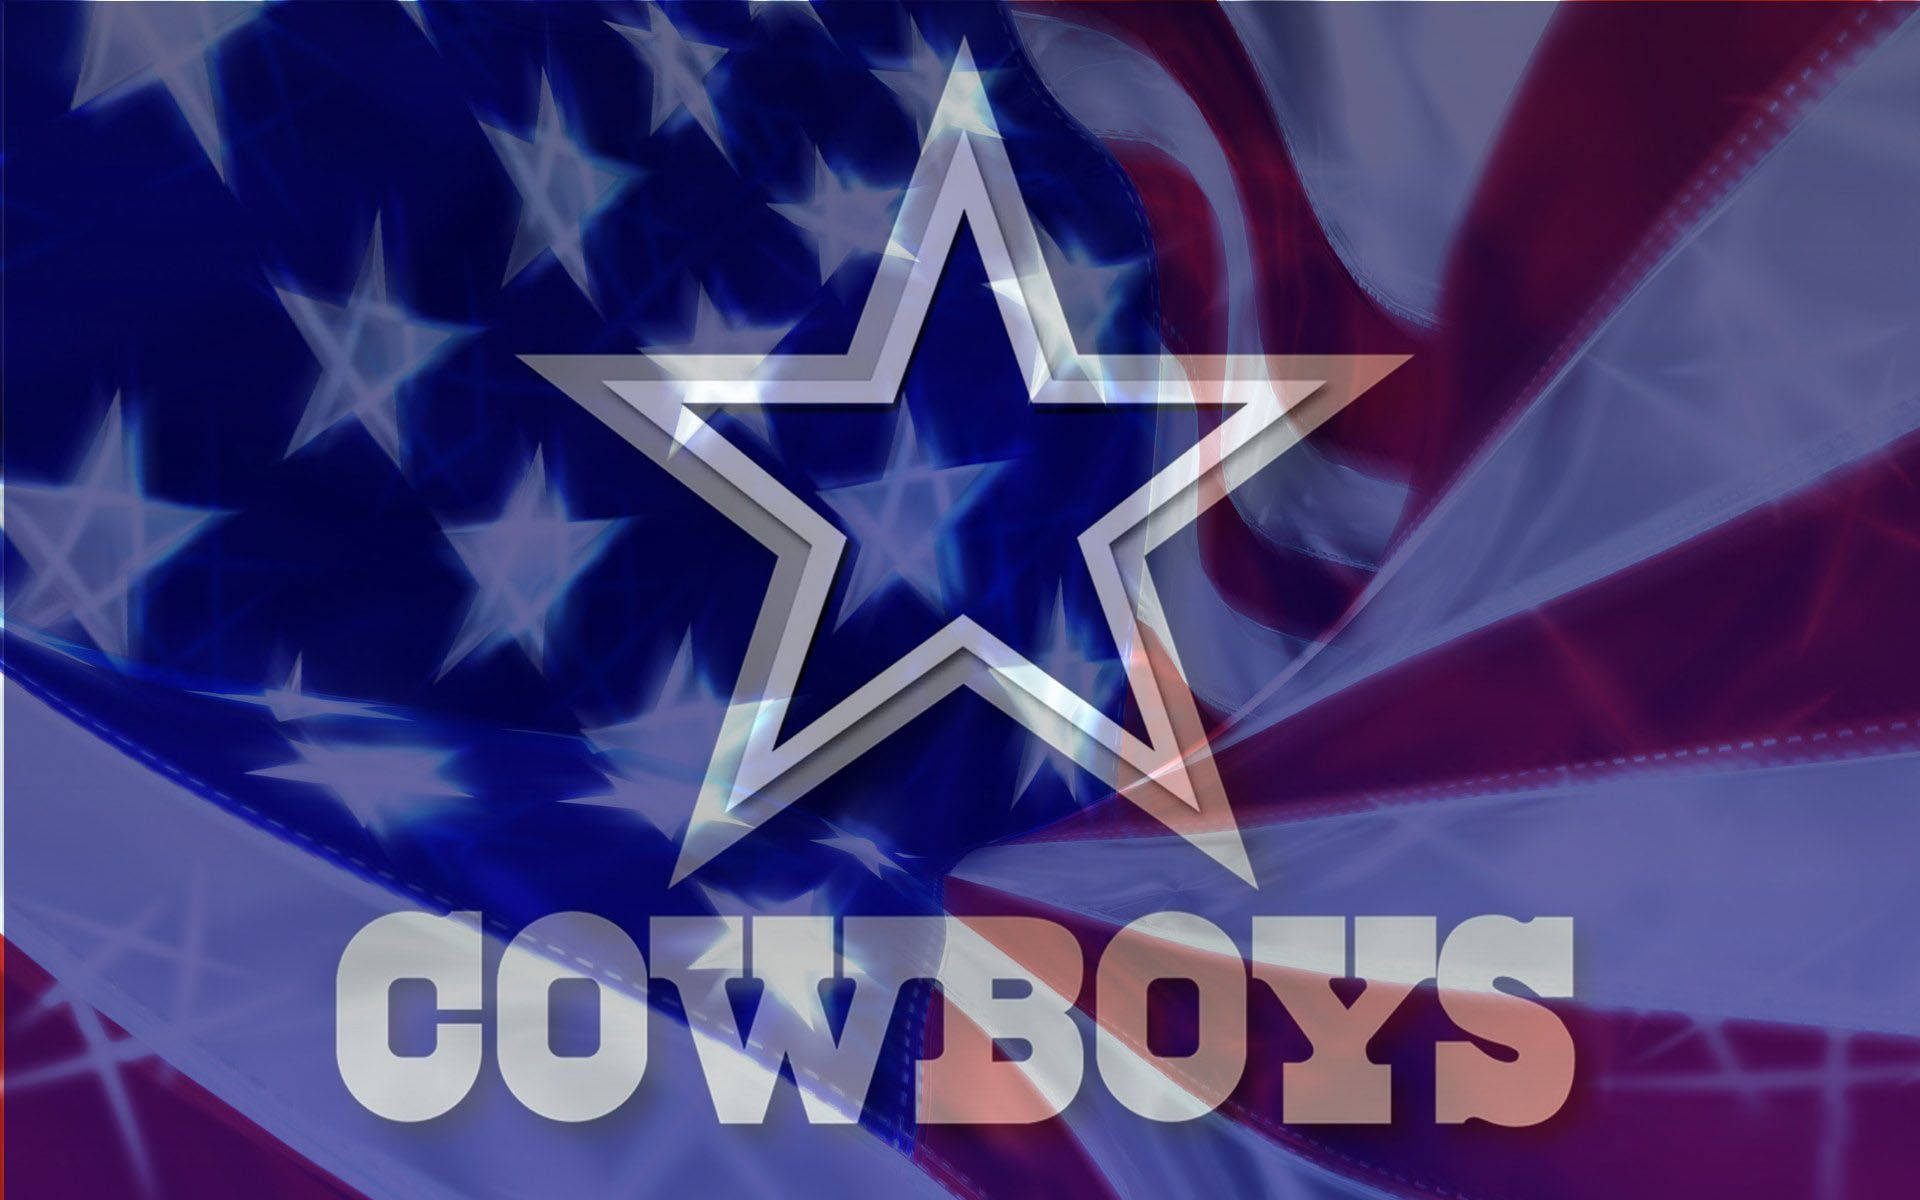 Dallas Cowboys Graphic Collage Background